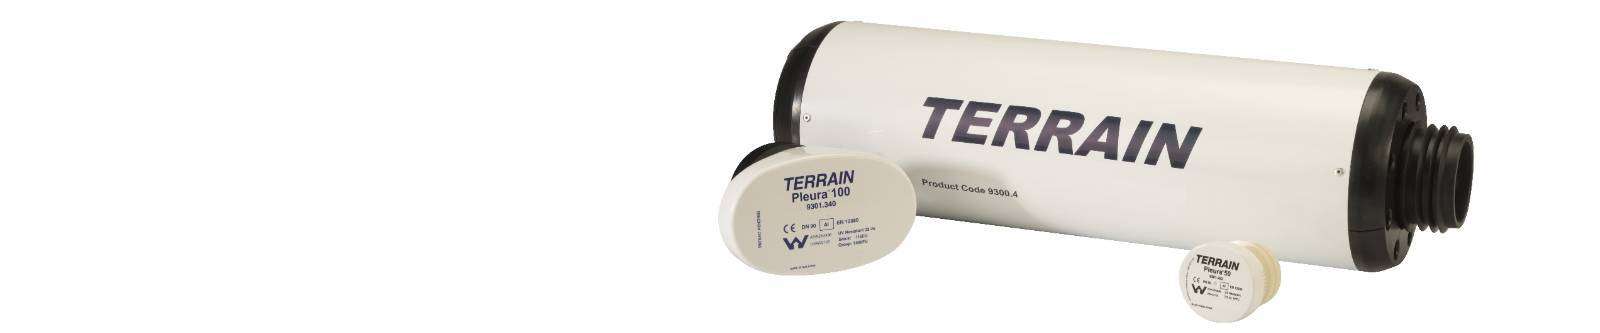 Terrain P.A.P.A® (Positive Air Pressure Attenuator) & Pleura vent system for commercial and public buildings